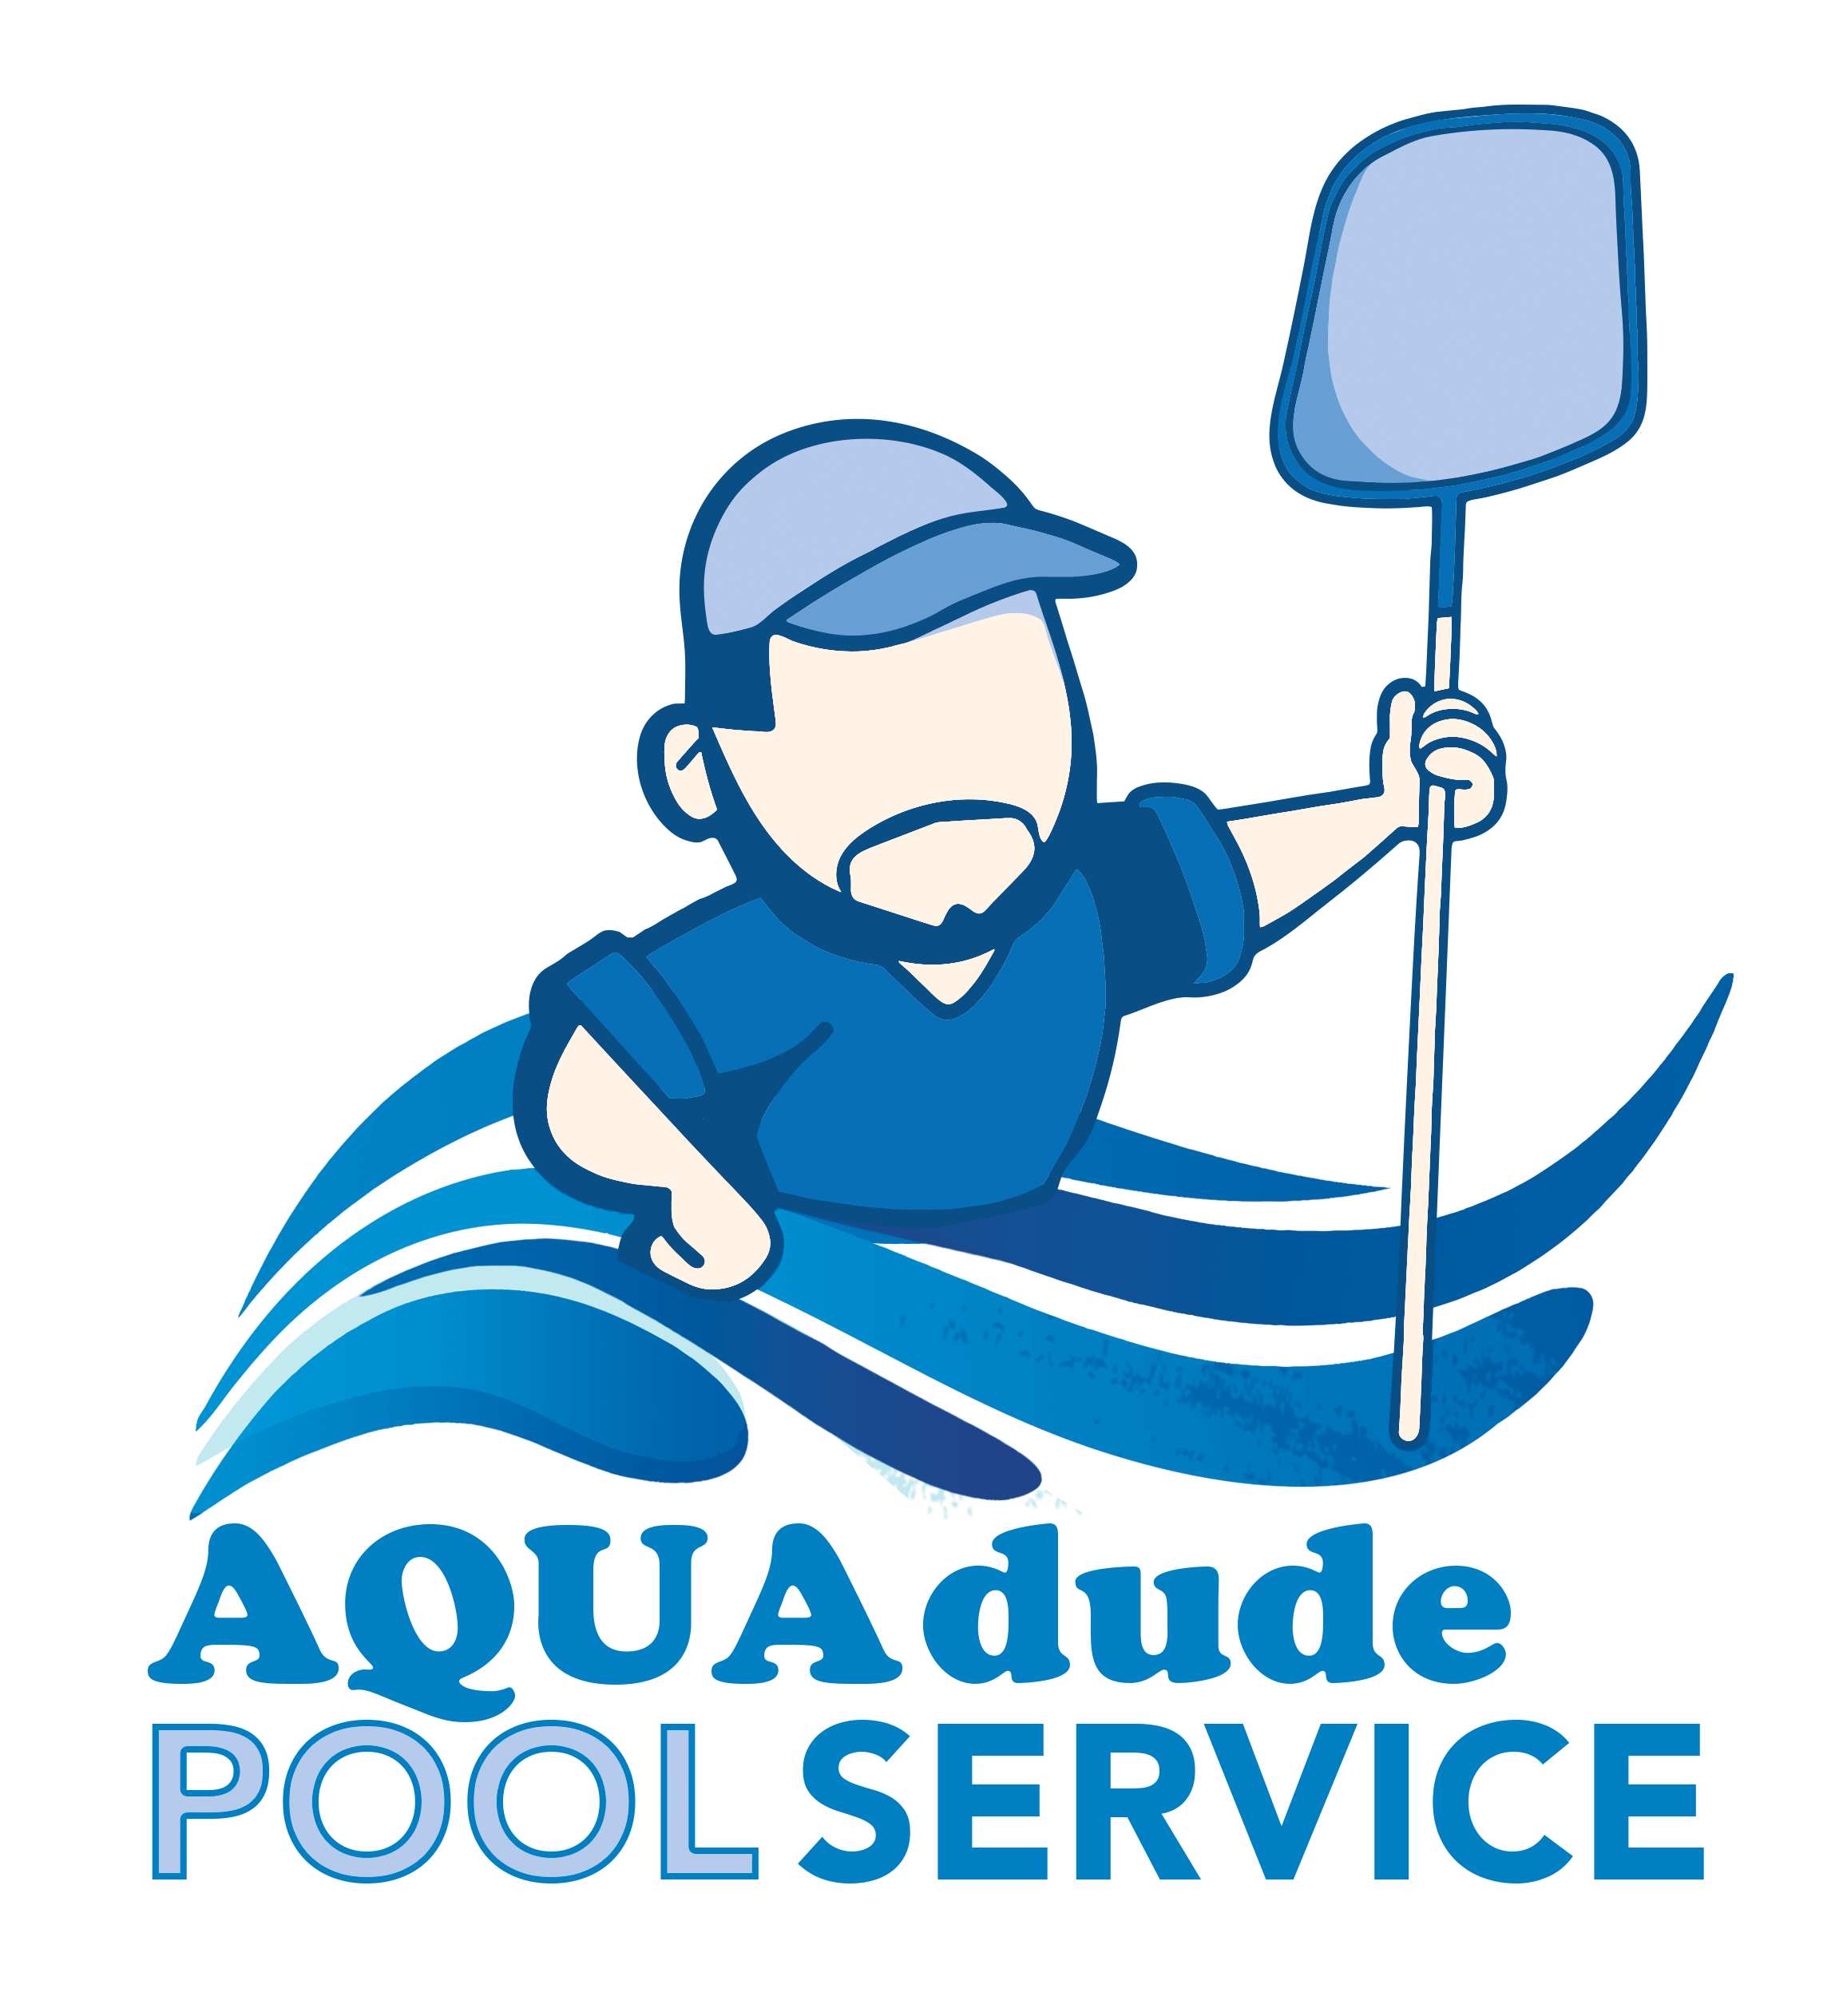 #1 Rated AquaDude Pool Service – Yelp